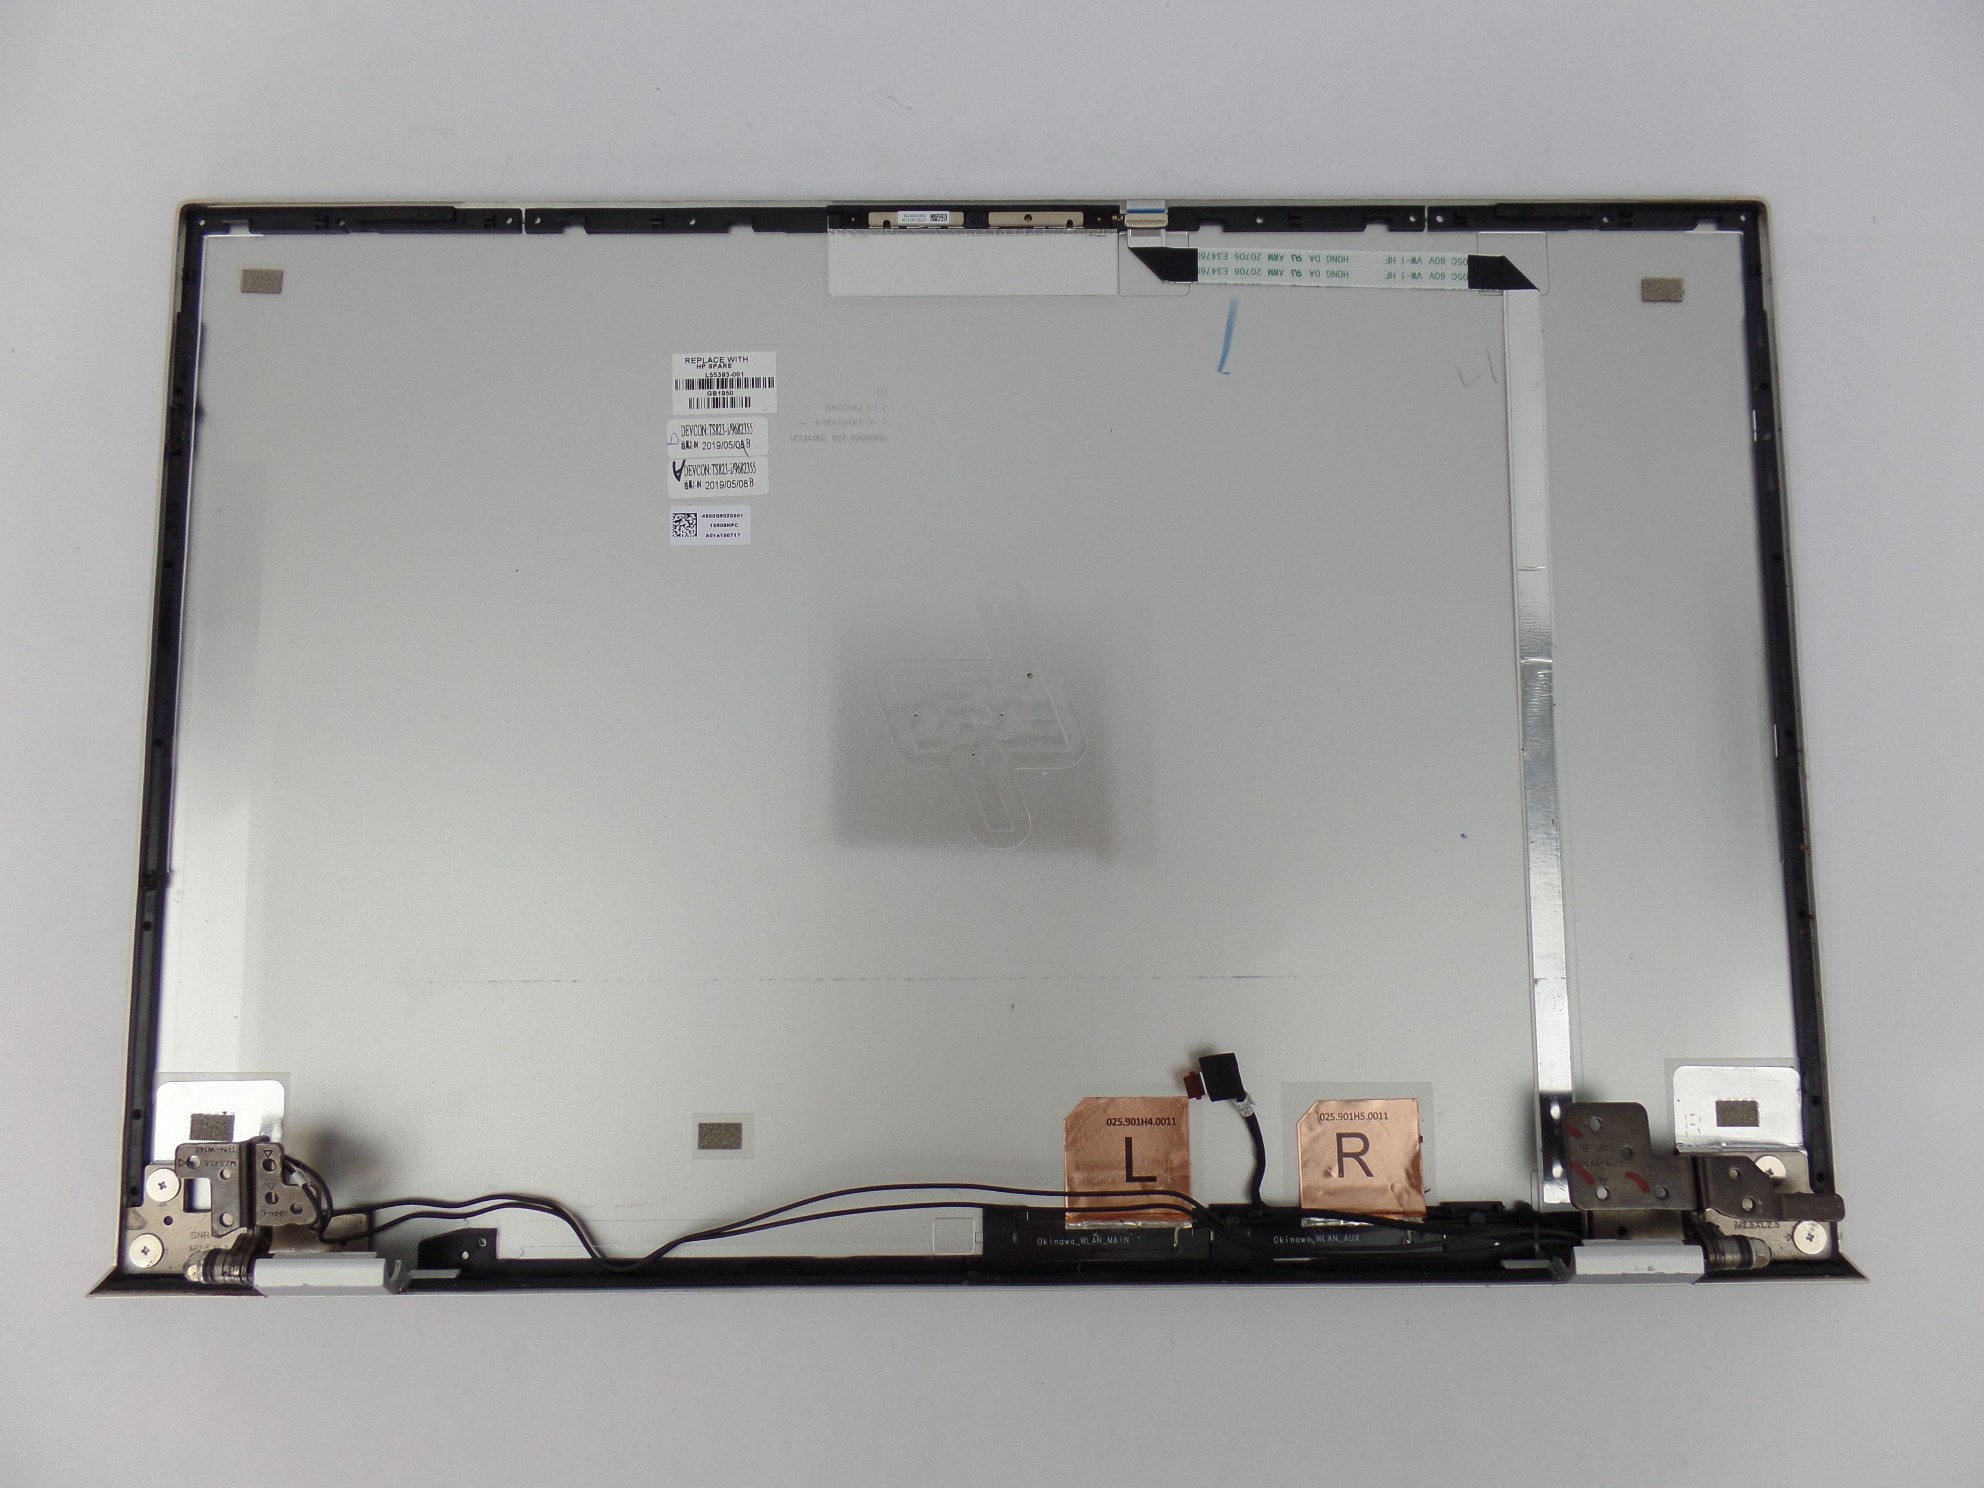 LCD Top Cover Enclosure+Hinges+Web Cam L55393-001 for HP Envy 17m-CE0013DX